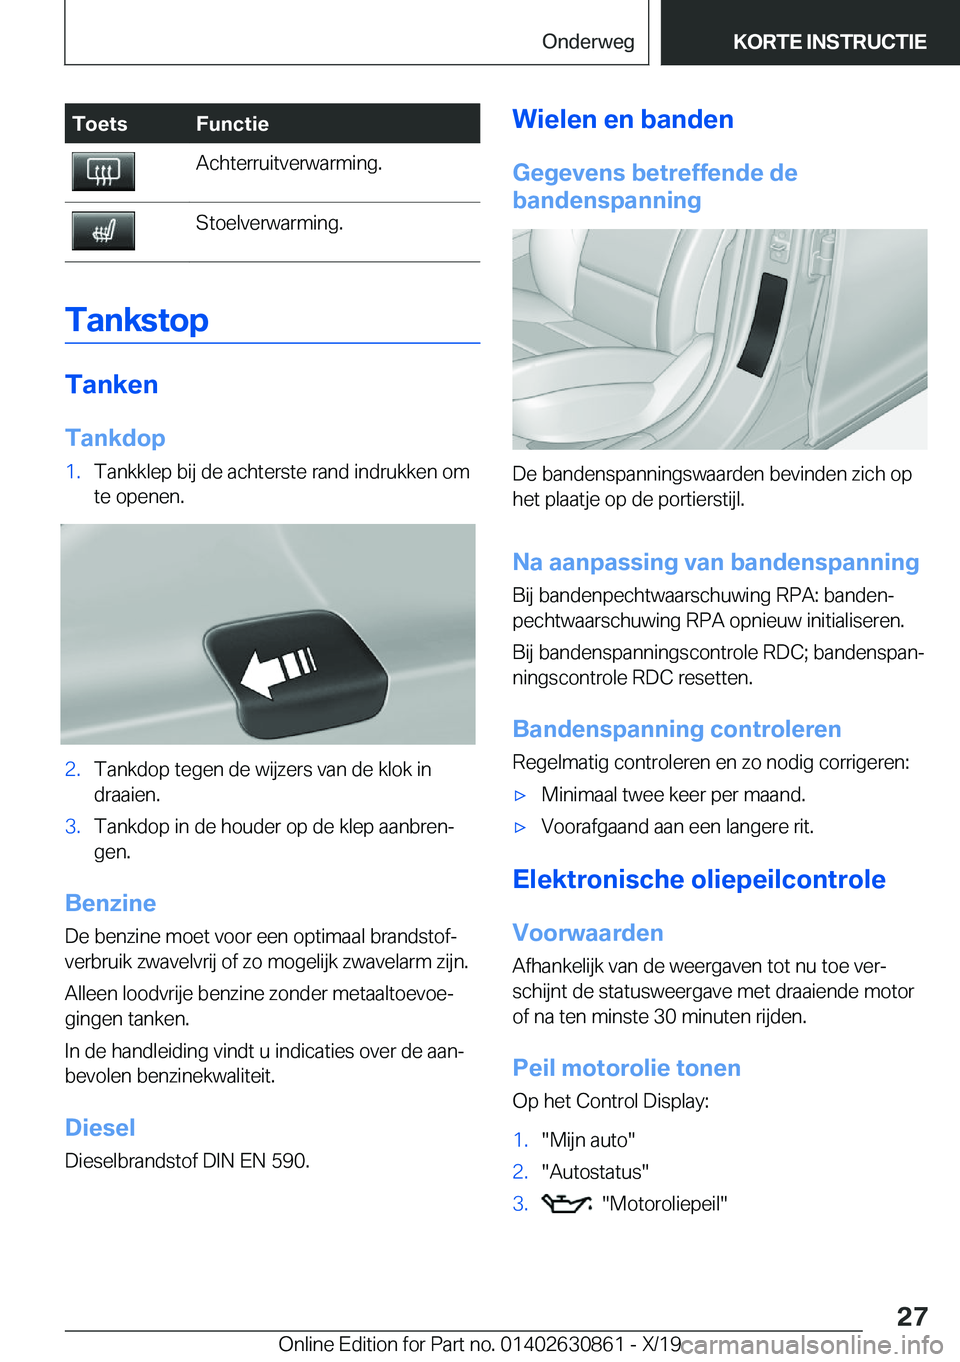 BMW 4 SERIES GRAN COUPE 2020  Instructieboekjes (in Dutch) �T�o�e�t�s�F�u�n�c�t�i�e�A�c�h�t�e�r�r�u�i�t�v�e�r�w�a�r�m�i�n�g�.�S�t�o�e�l�v�e�r�w�a�r�m�i�n�g�.
�T�a�n�k�s�t�o�p
�T�a�n�k�e�n�T�a�n�k�d�o�p
�1�.�T�a�n�k�k�l�e�p��b�i�j��d�e��a�c�h�t�e�r�s�t�e��